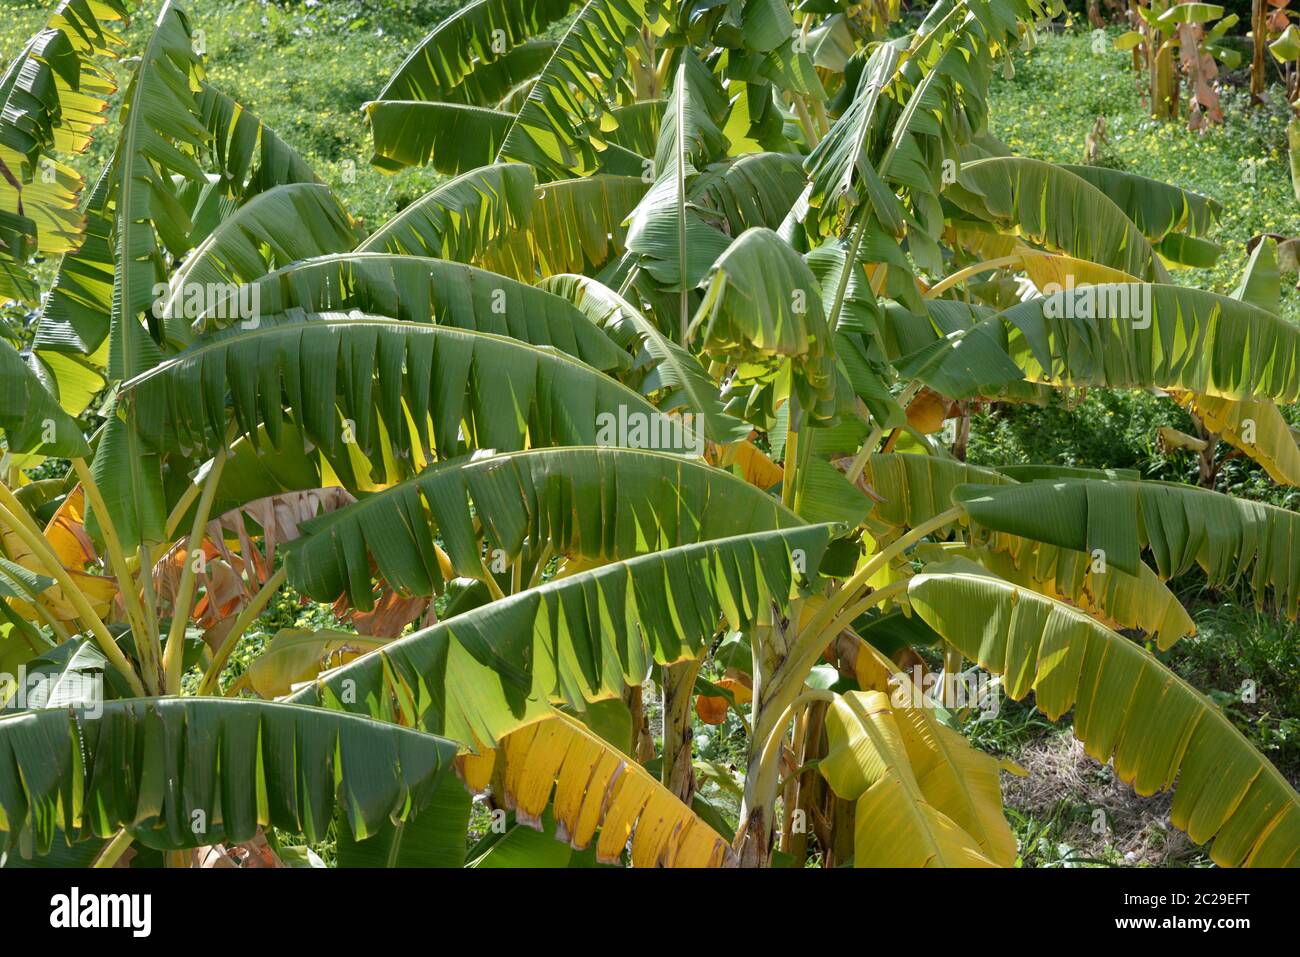 Banana tree in Spain Stock Photo